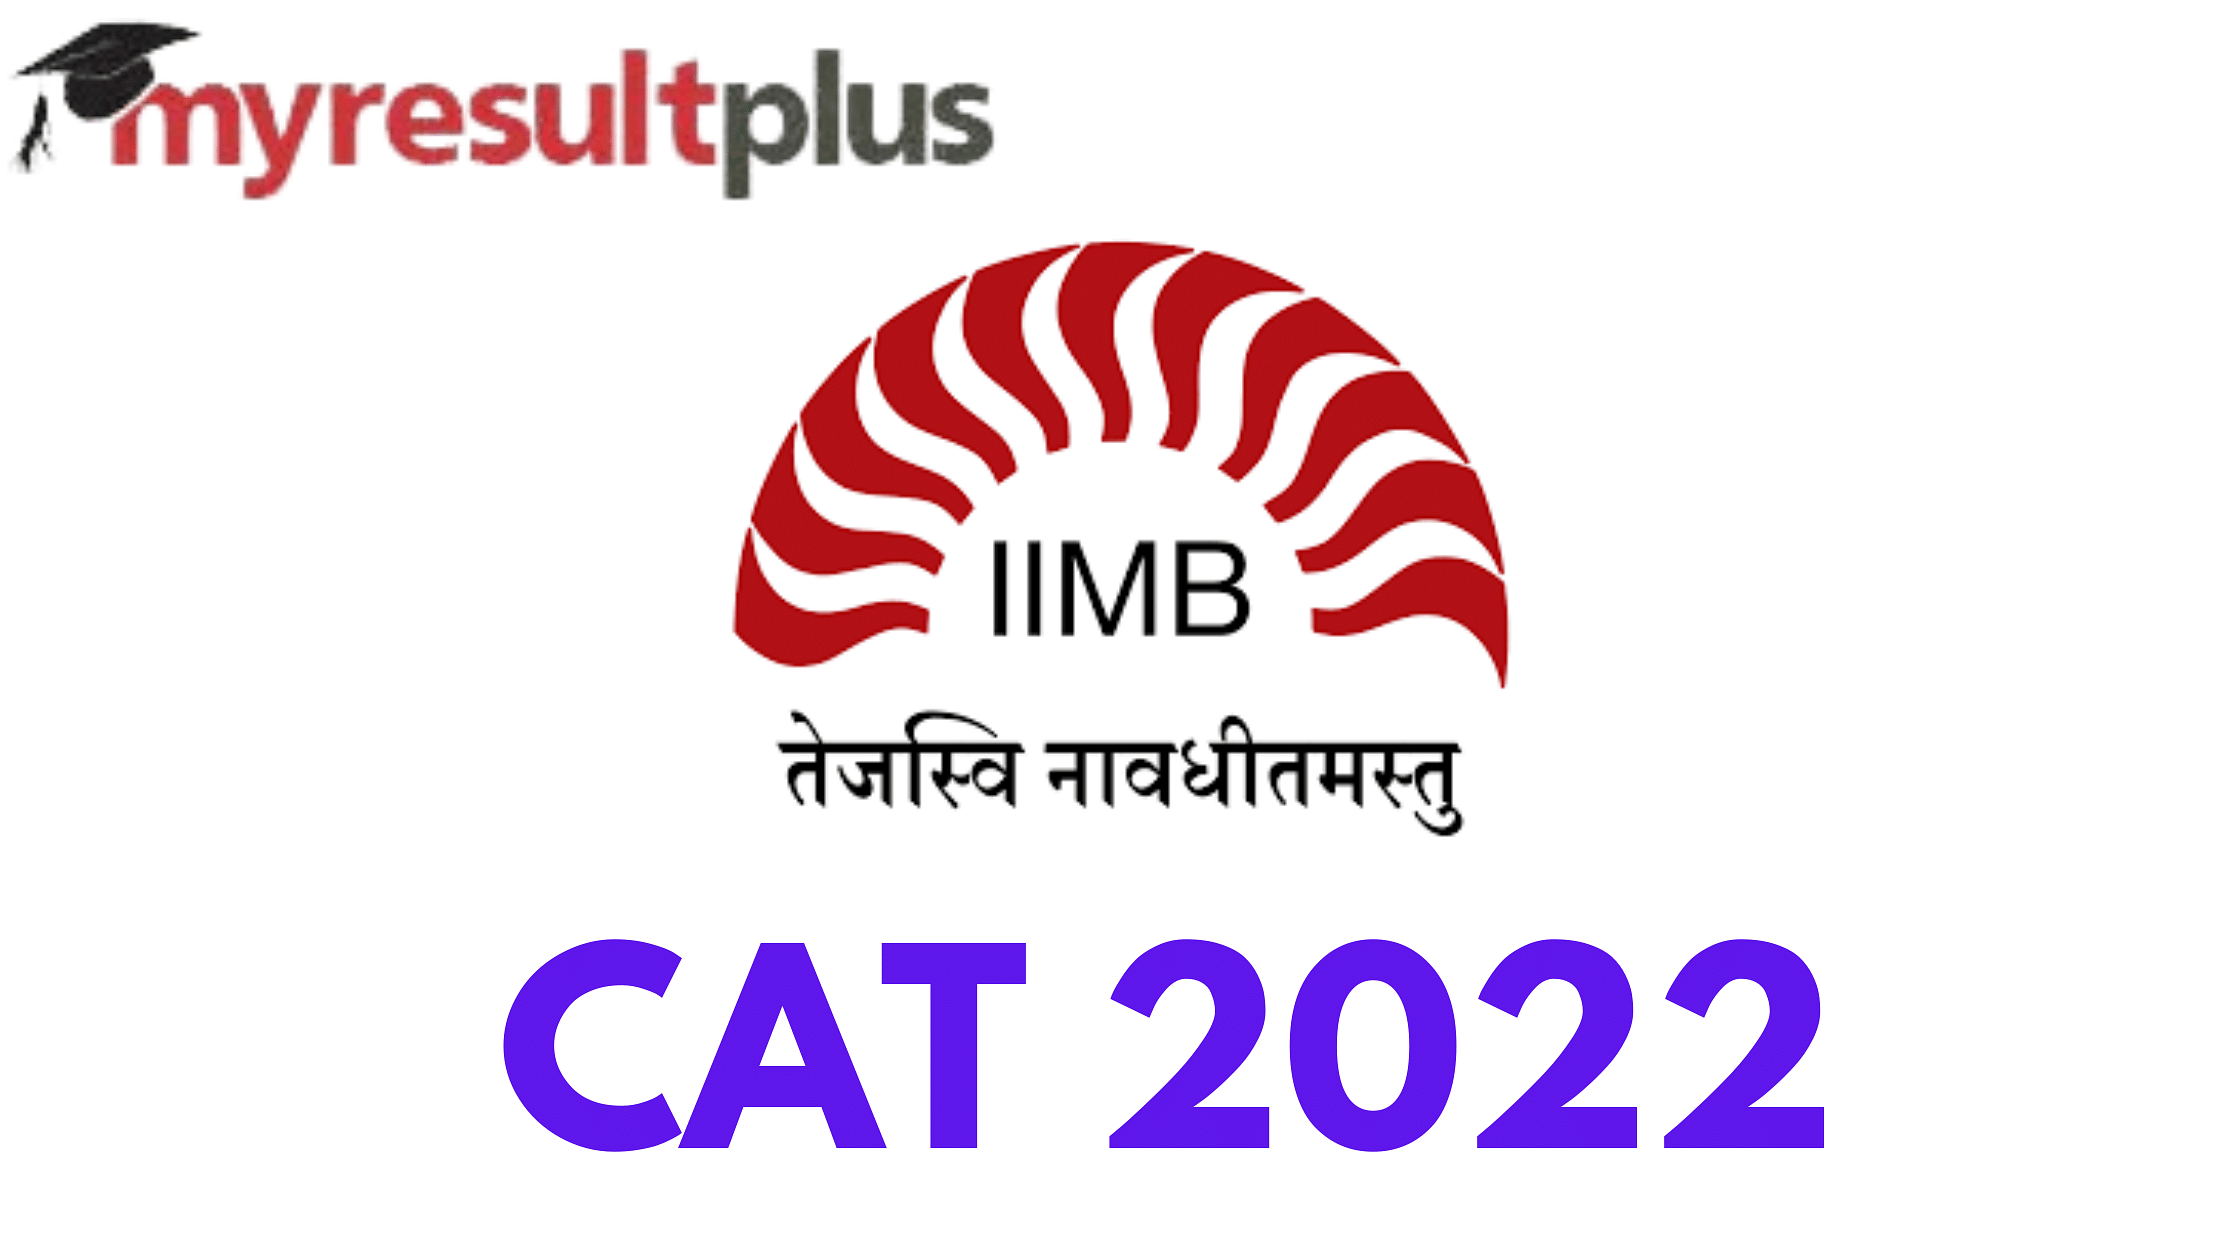 CAT 2022: Registration Deadline Extended, Steps to Fill Application Form Here